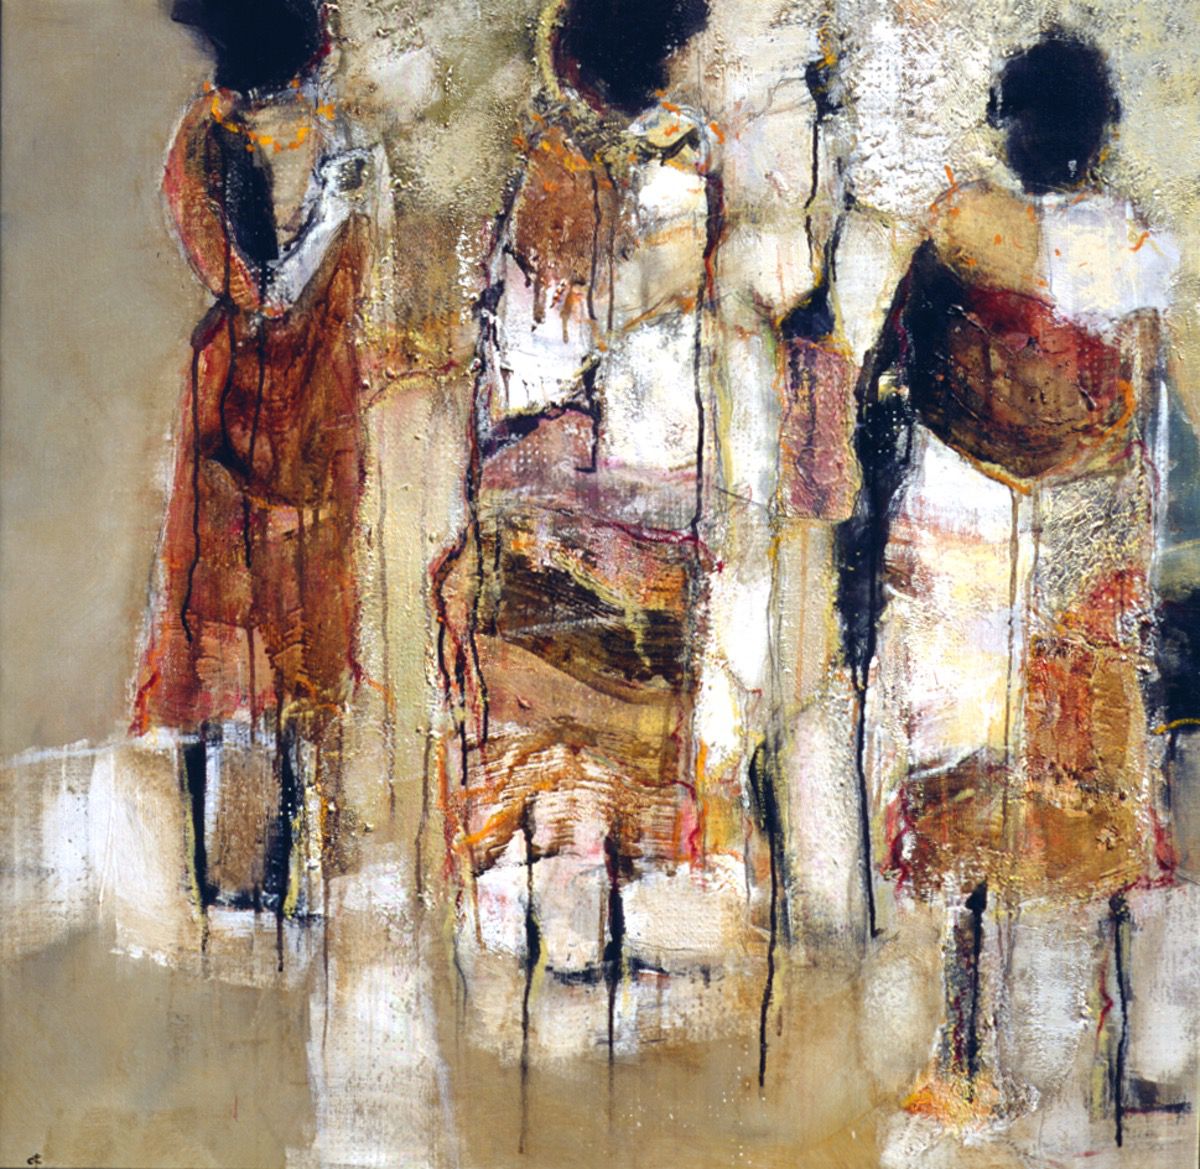 ”Masai” 2002, 100 x 100 cm. Akryl, olie, sand og håndgjort papir på lærred. (Carsten Frank nr. 676) Sold